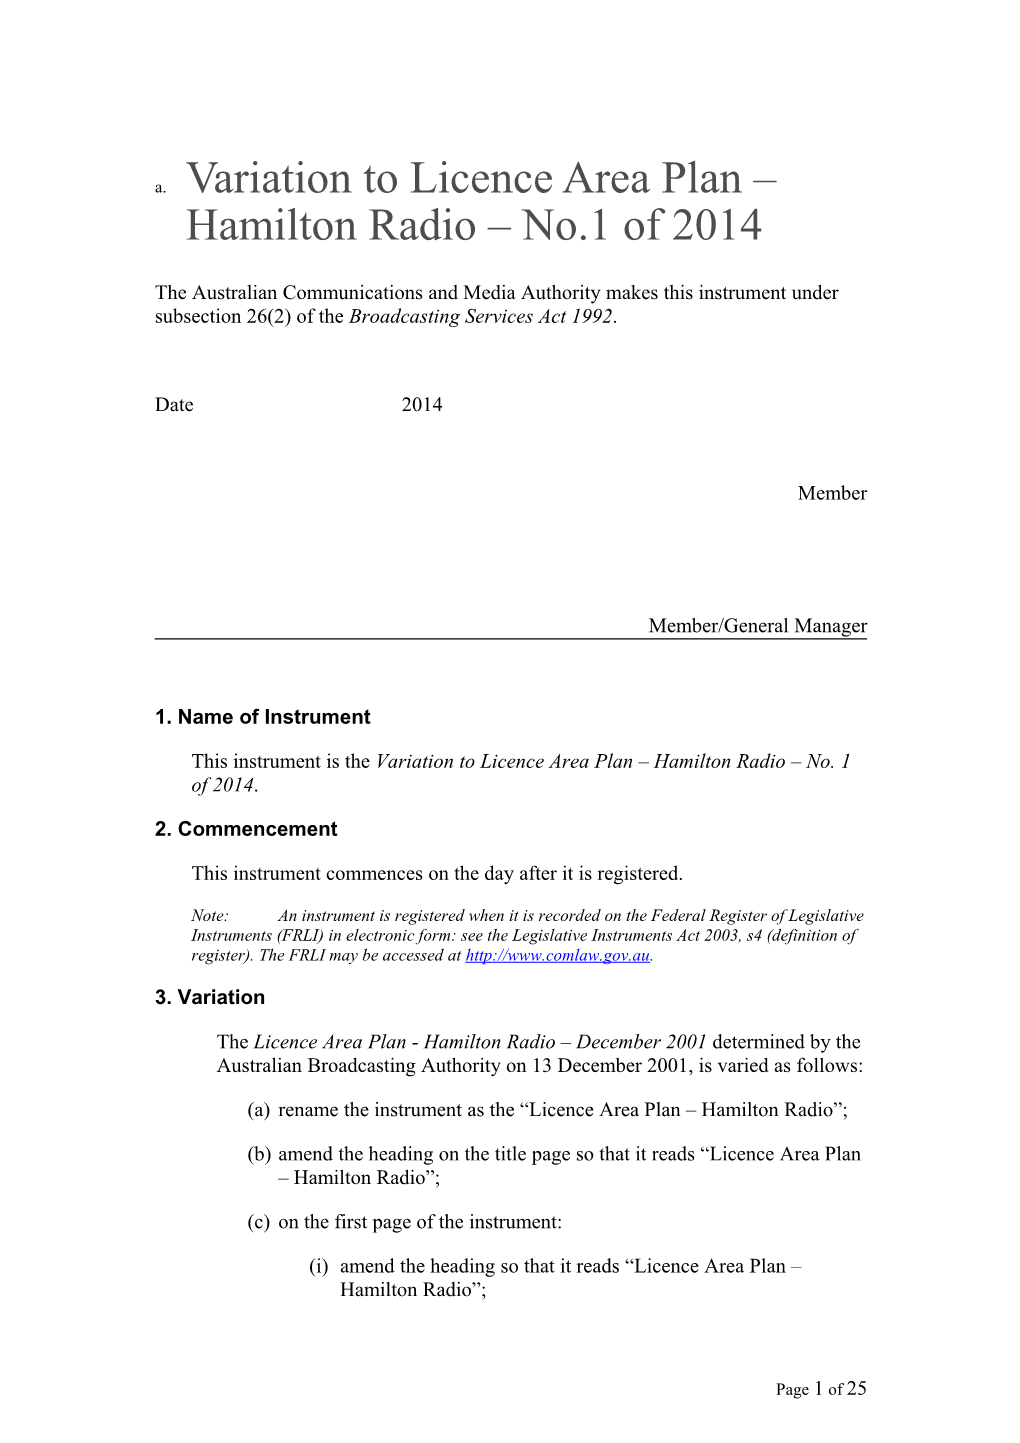 Variation to Licence Area Plan Hamilton Radio No.1 of 2014